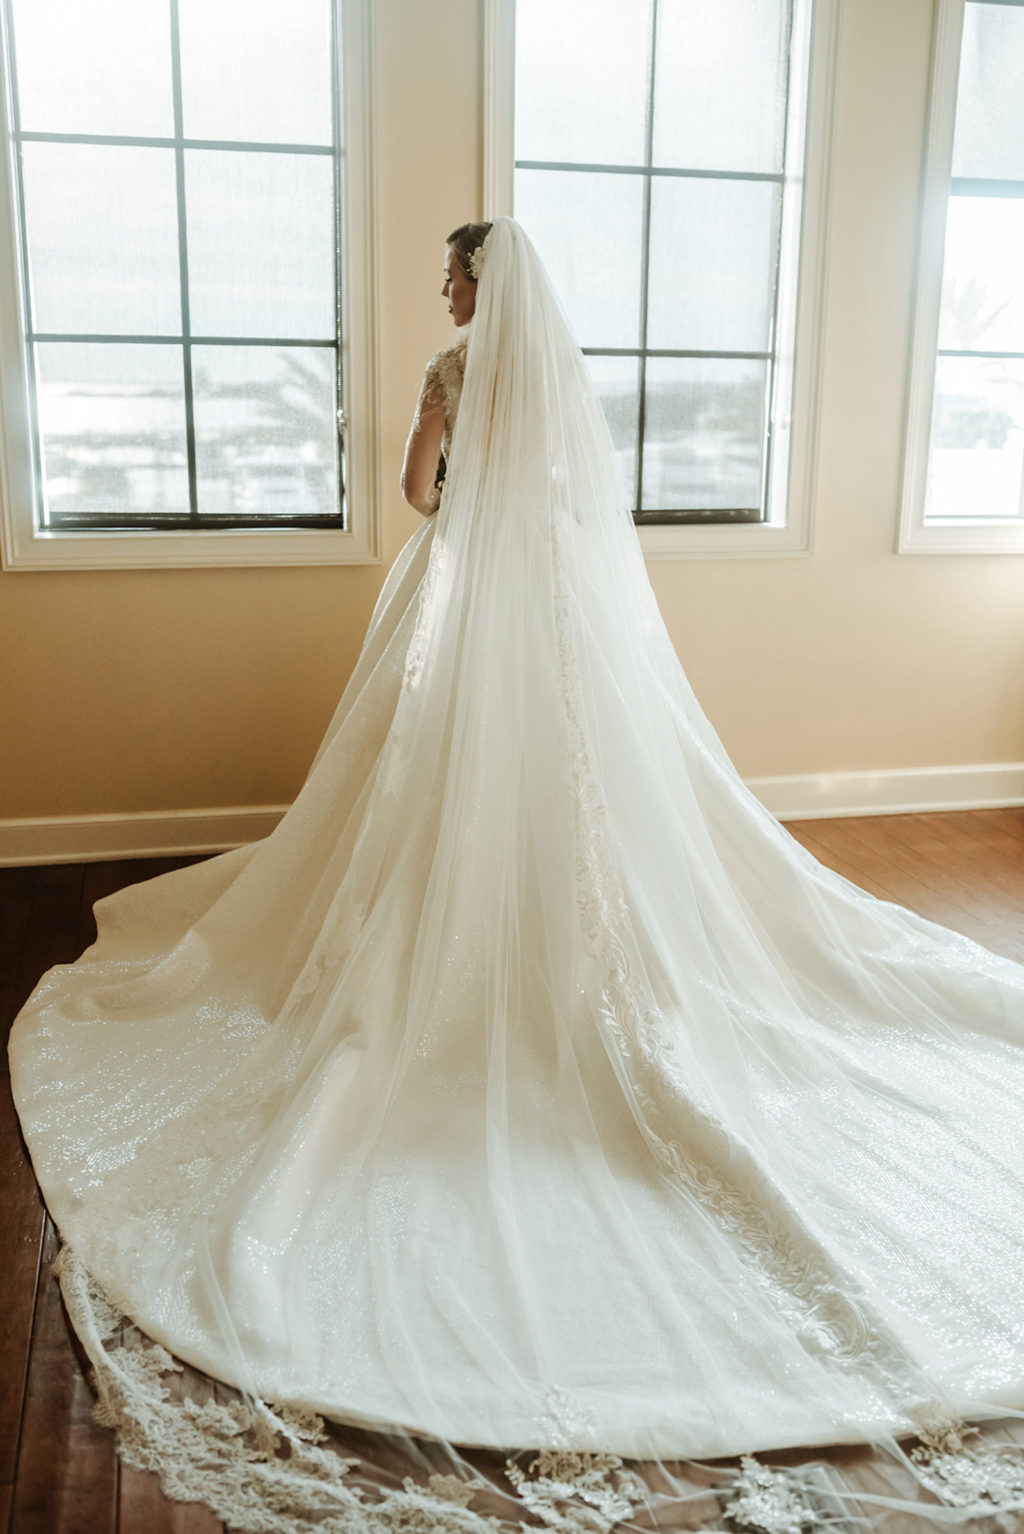 Florida Bride in Glamorous Full Skirt Train and Full Length Lace Veil